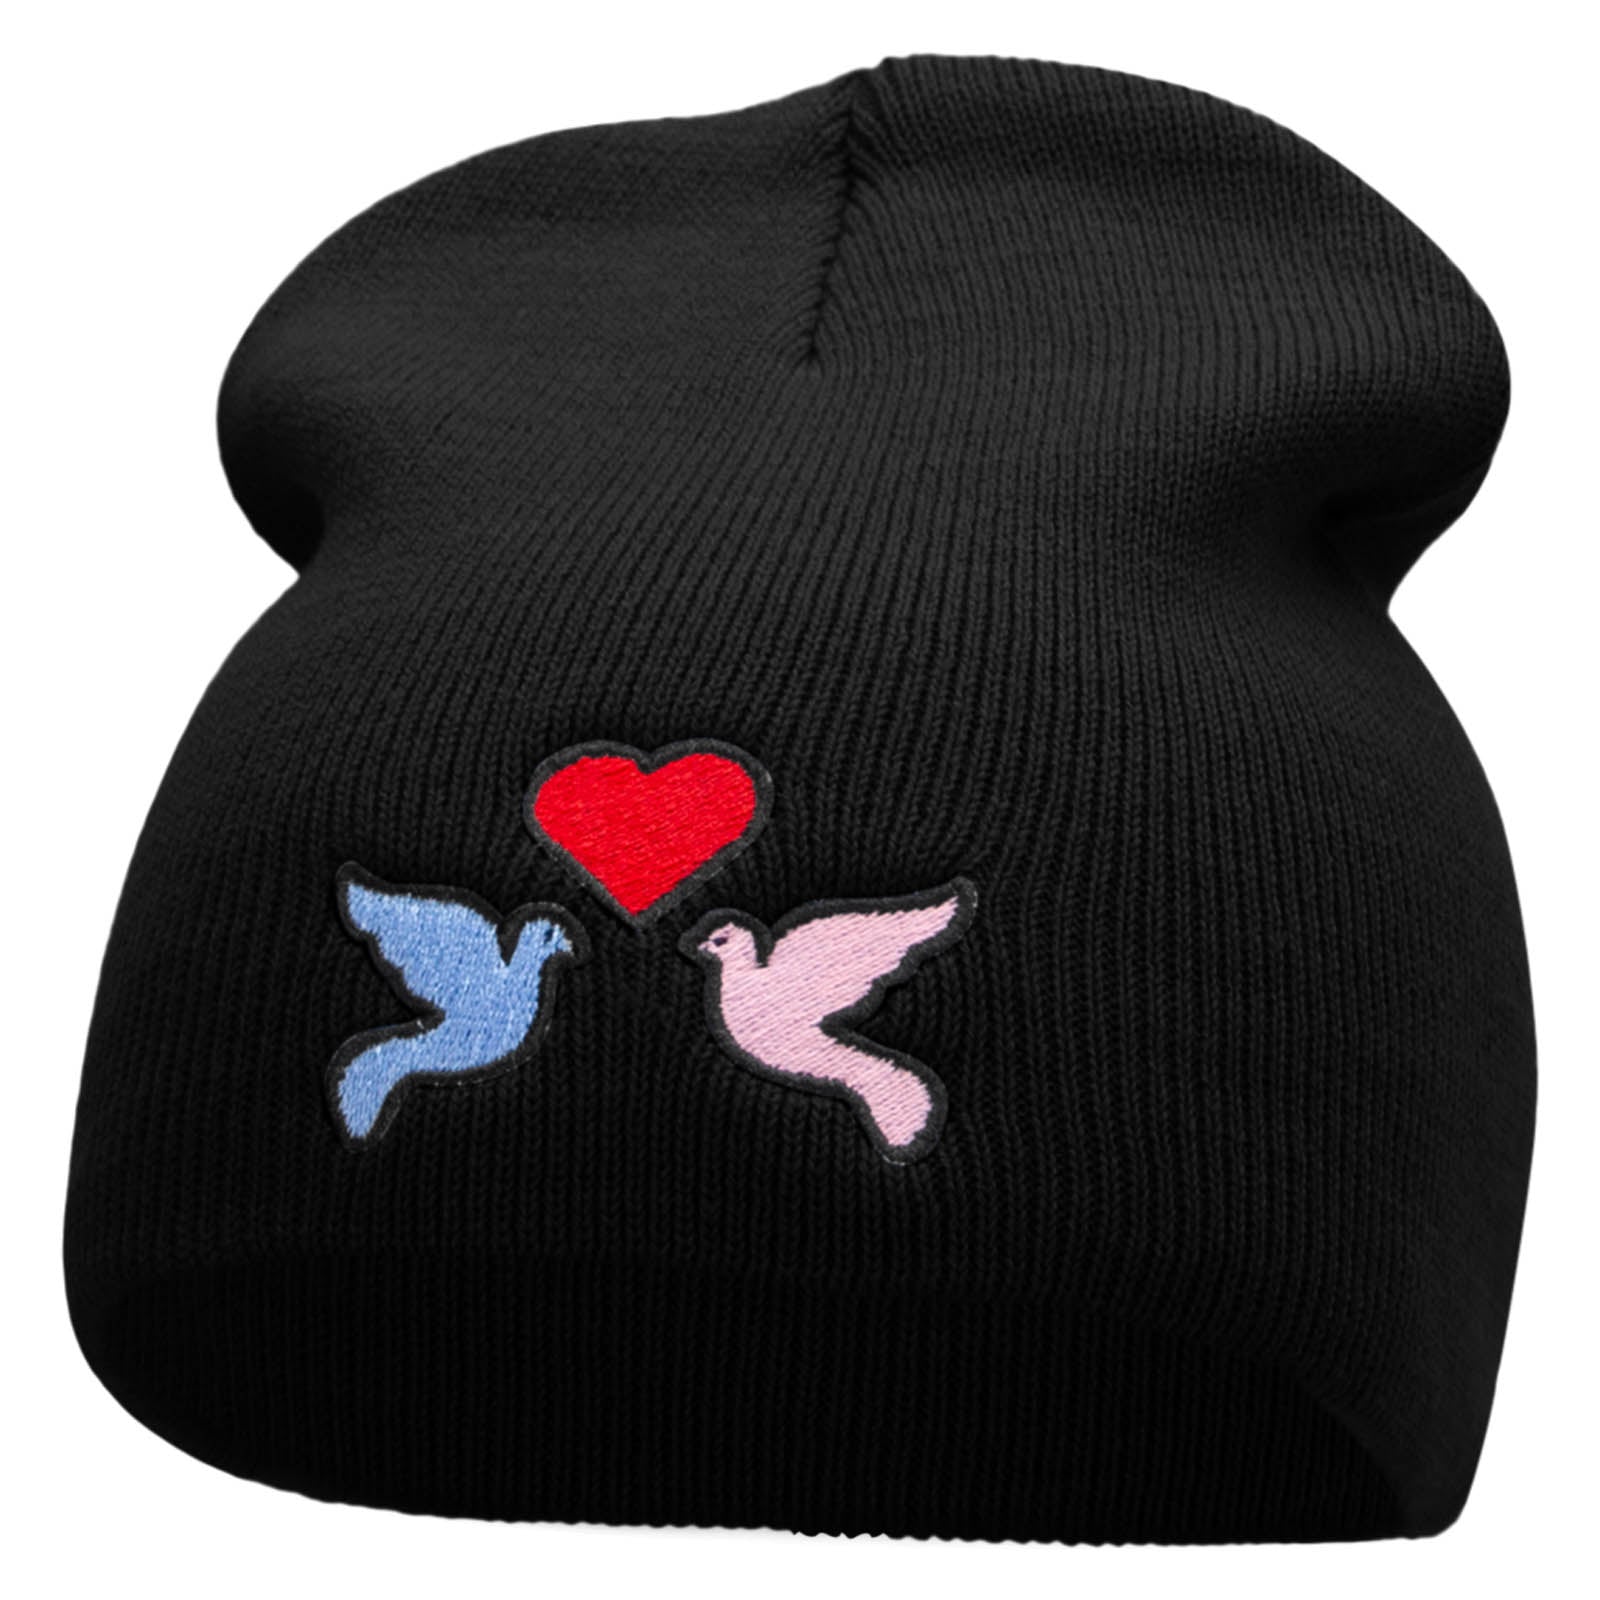 2 Love Birds Embroidered 8 Inch Short Beanie - Black OSFM